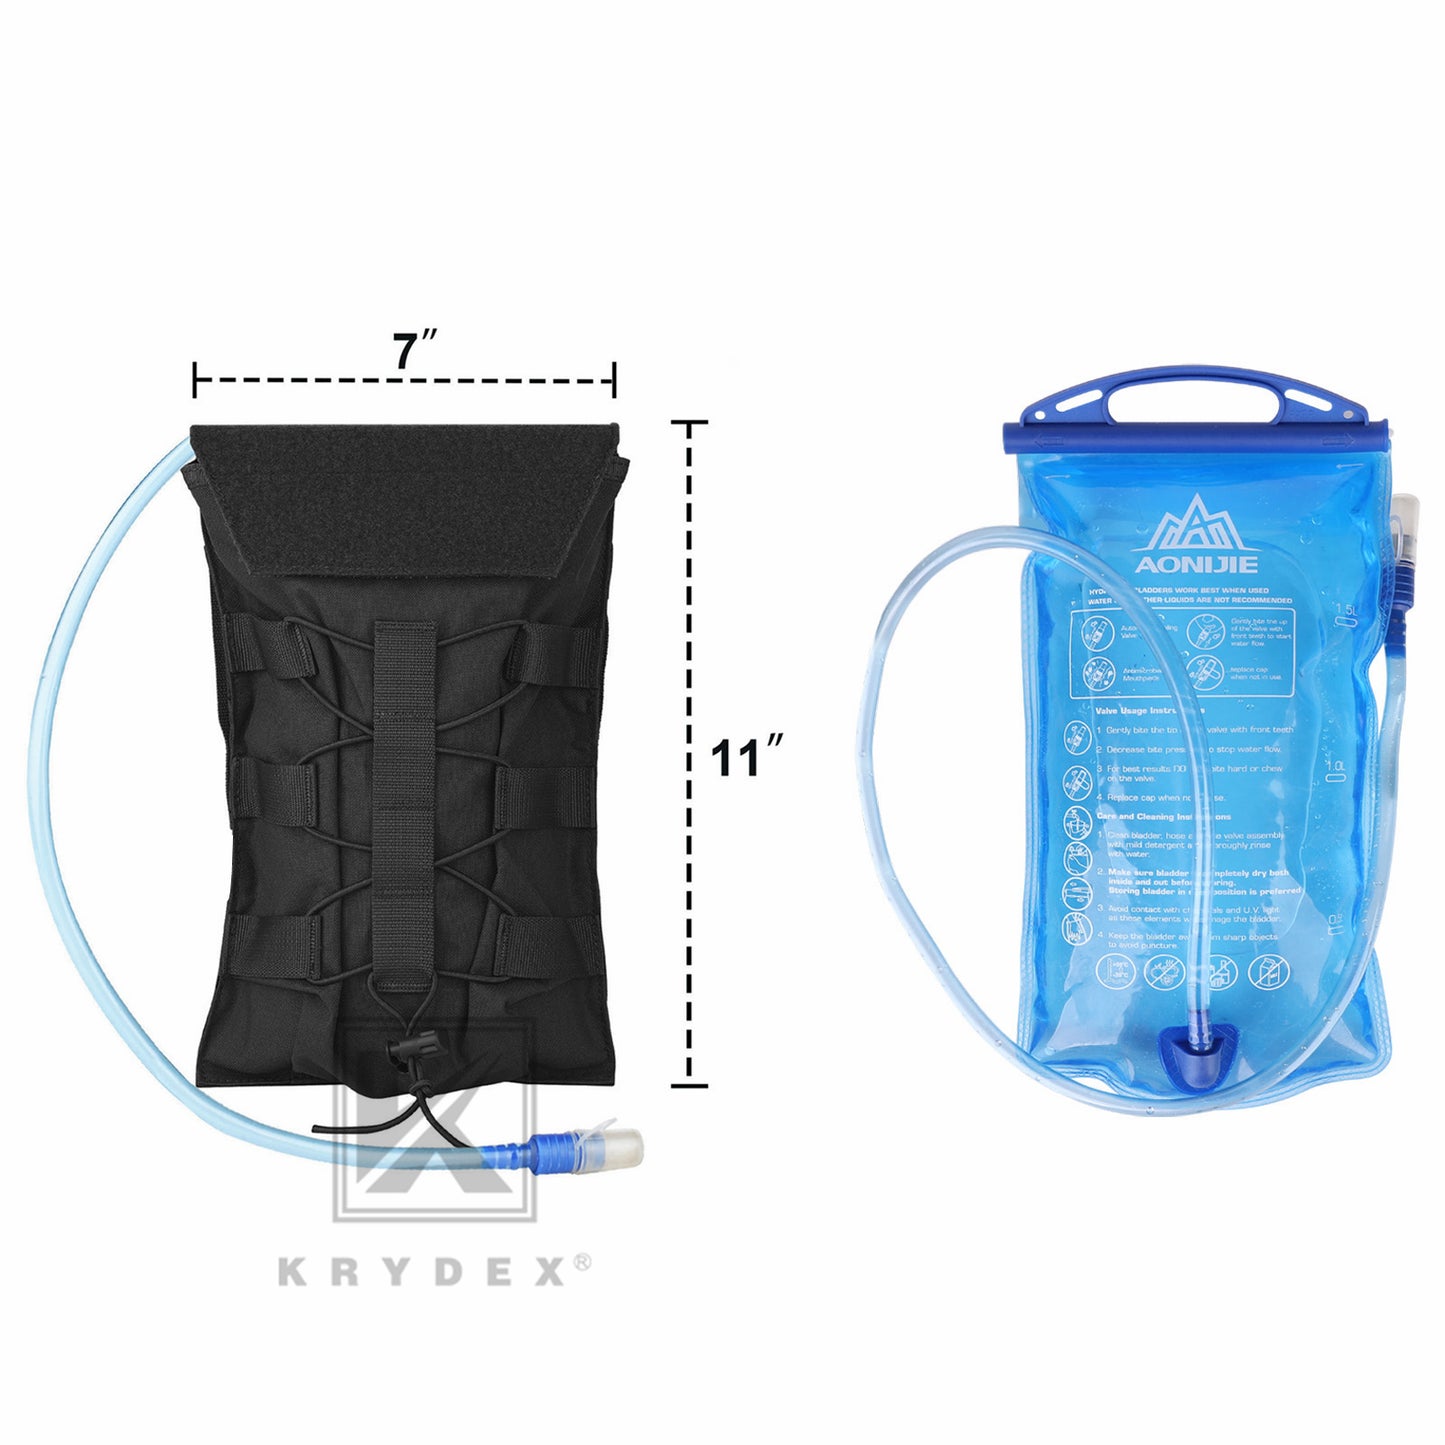 Krydex Tactical 50 oz Hydration Carrier MOLLE Pack Modular Water Bladder Pouch